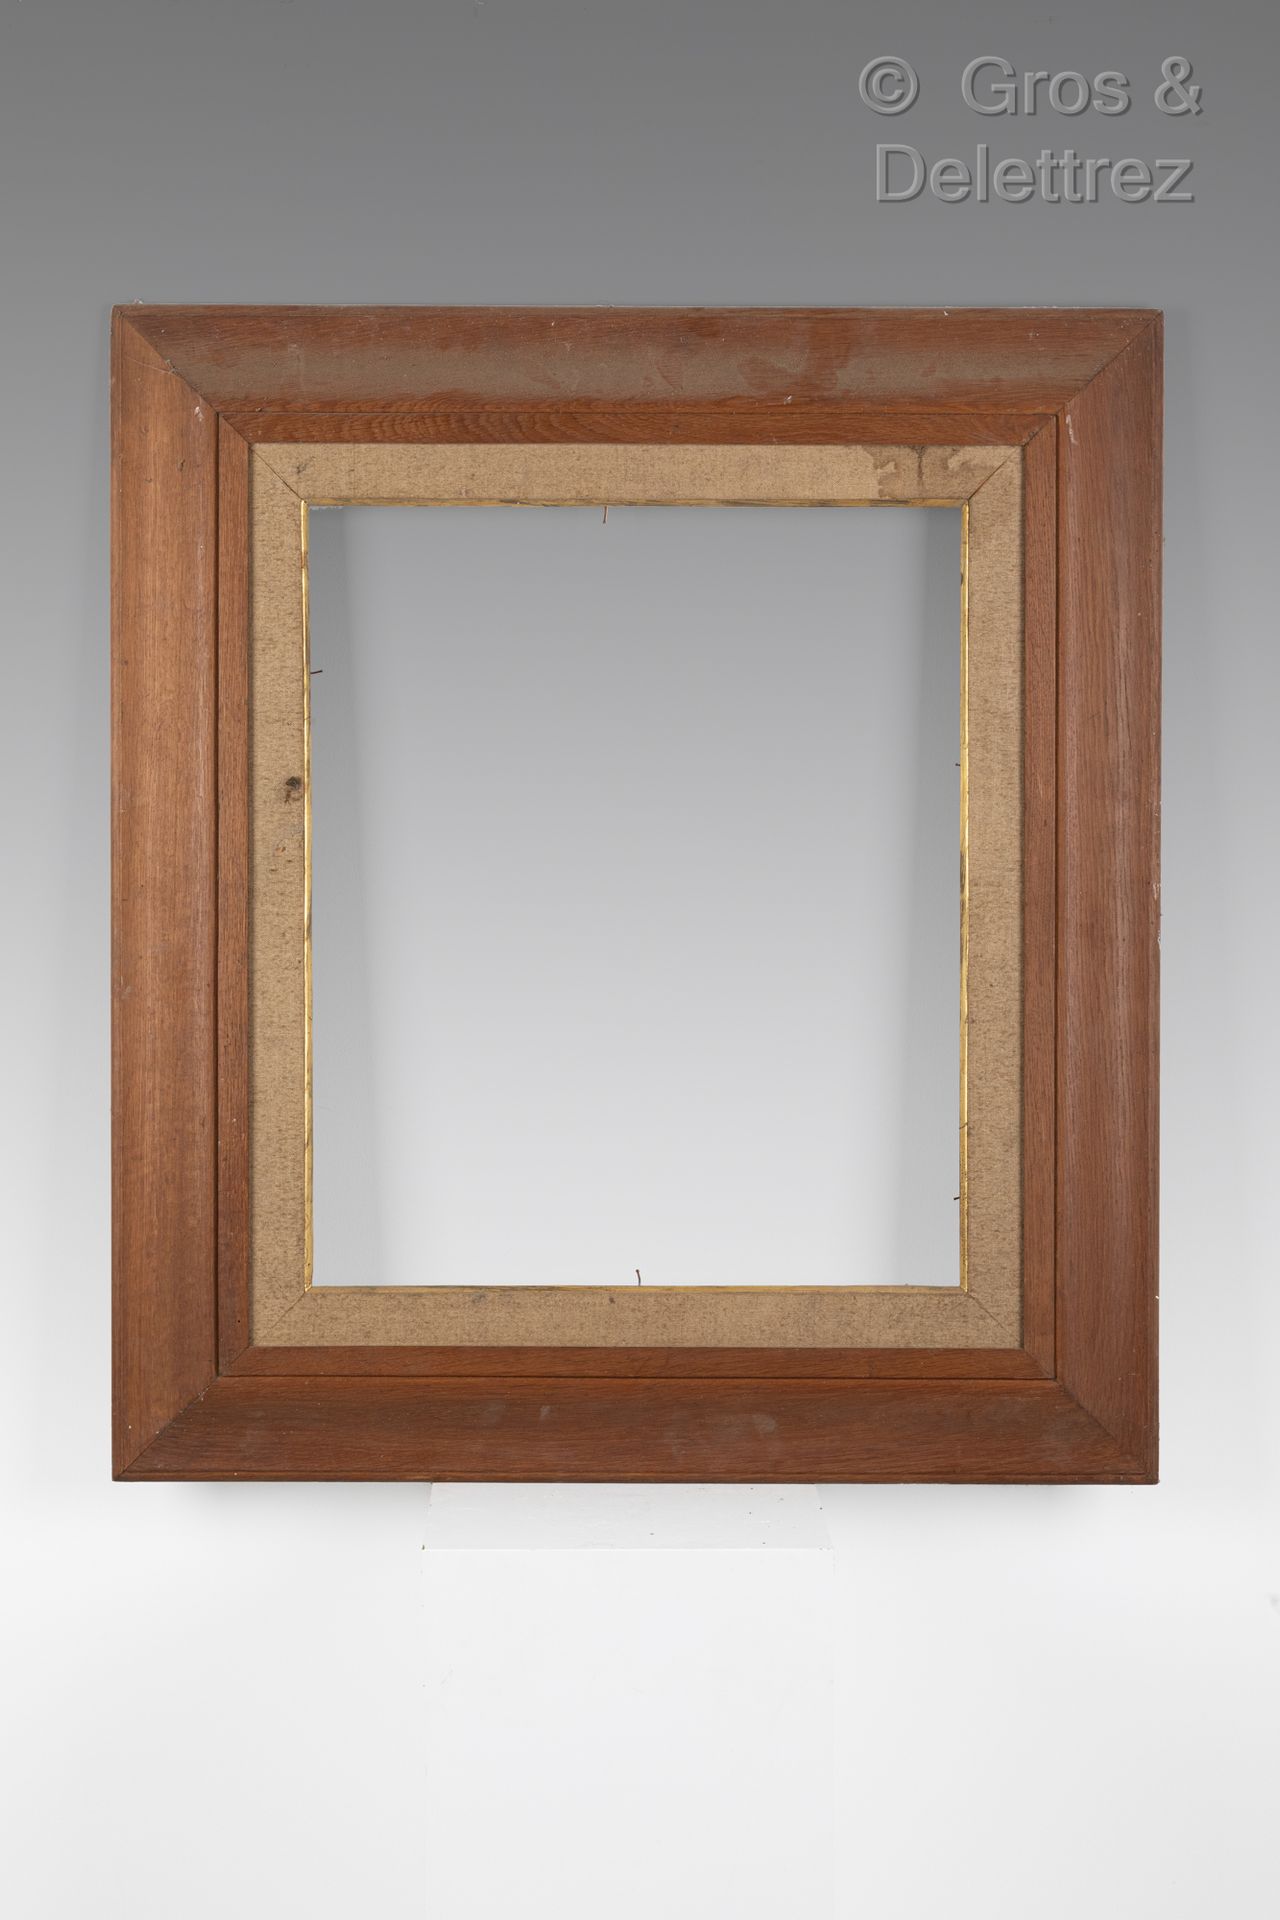 Null 颠倒的胡桃木框架

约1920年

60 x 69,7 x 10,5厘米。20F